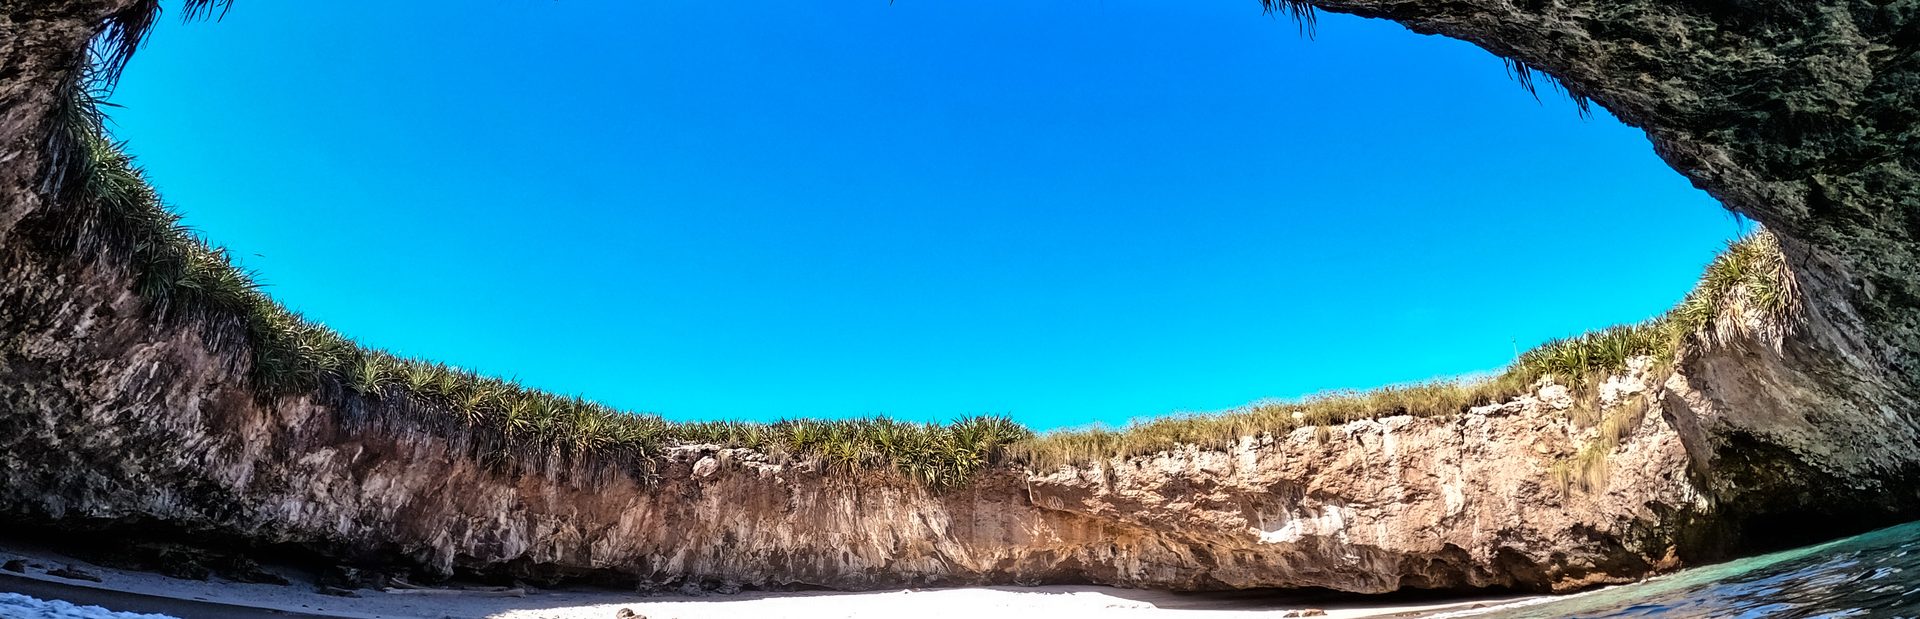 Playa Escondida (Love Beach) Image 1